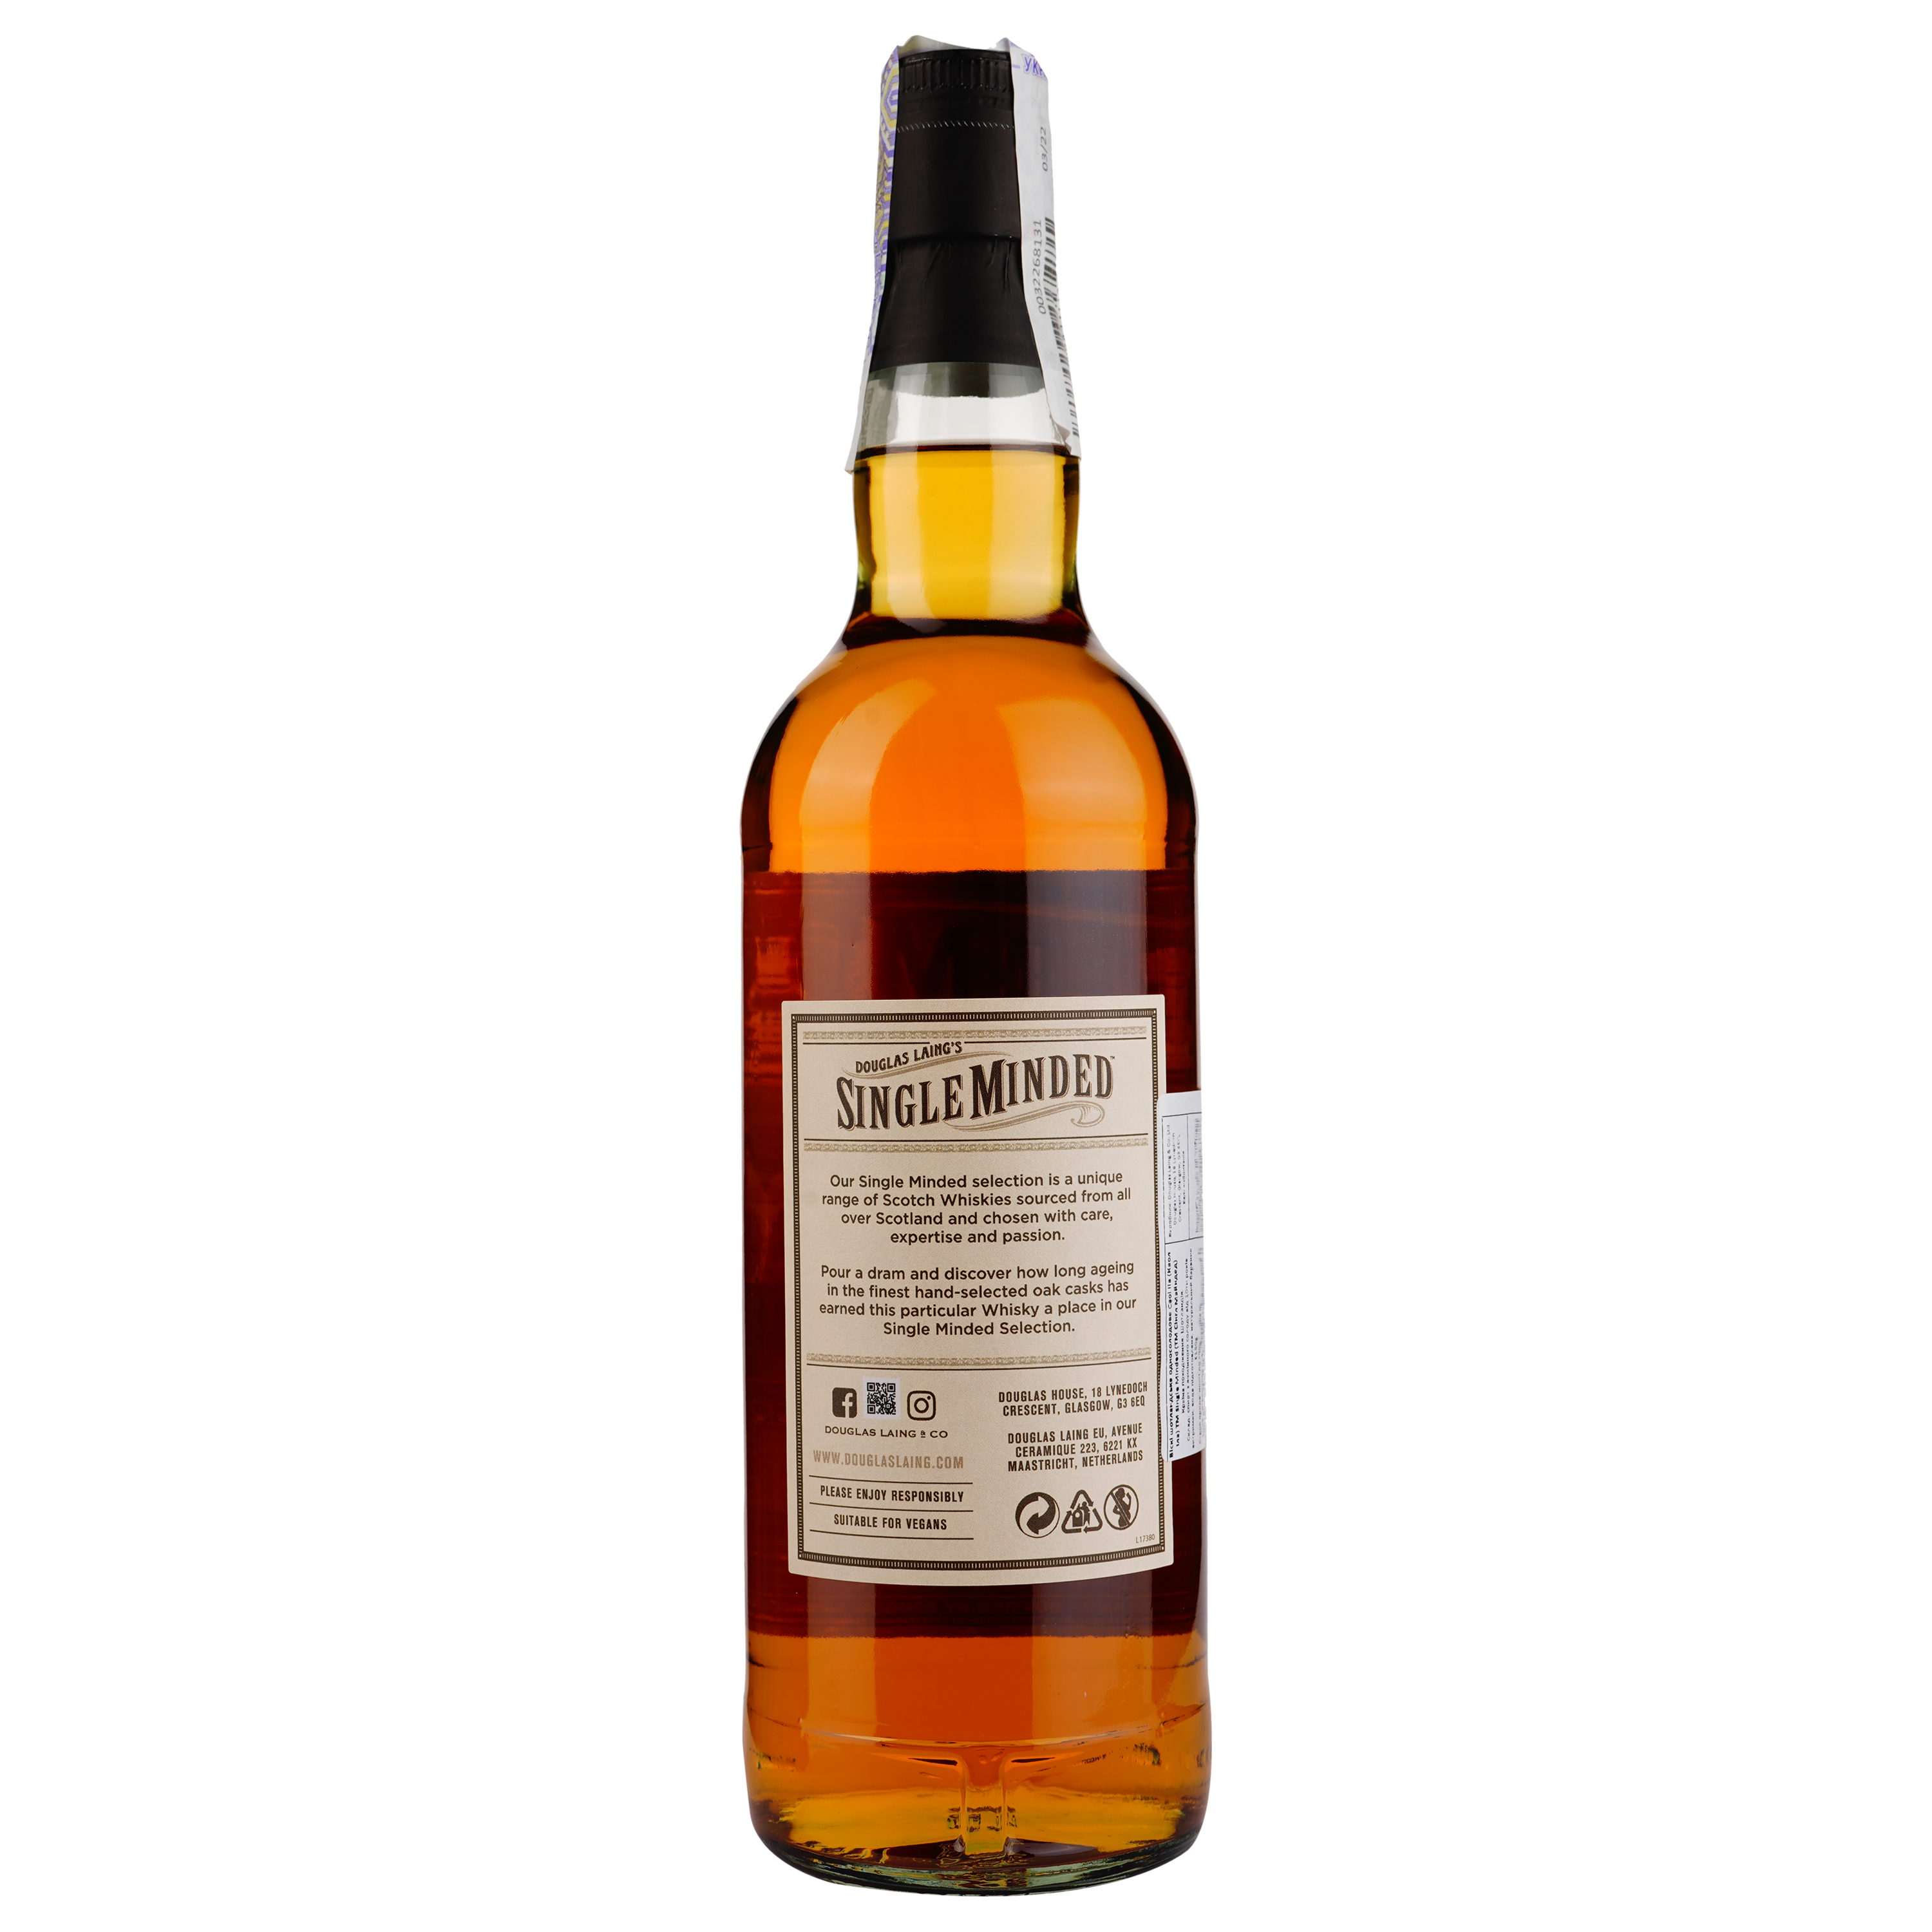 Виски Single Minded Caol Ila 10 yo Single Malt Sotch Whisky, в подарочной упаковке, 43%, 0,7 л, - фото 2